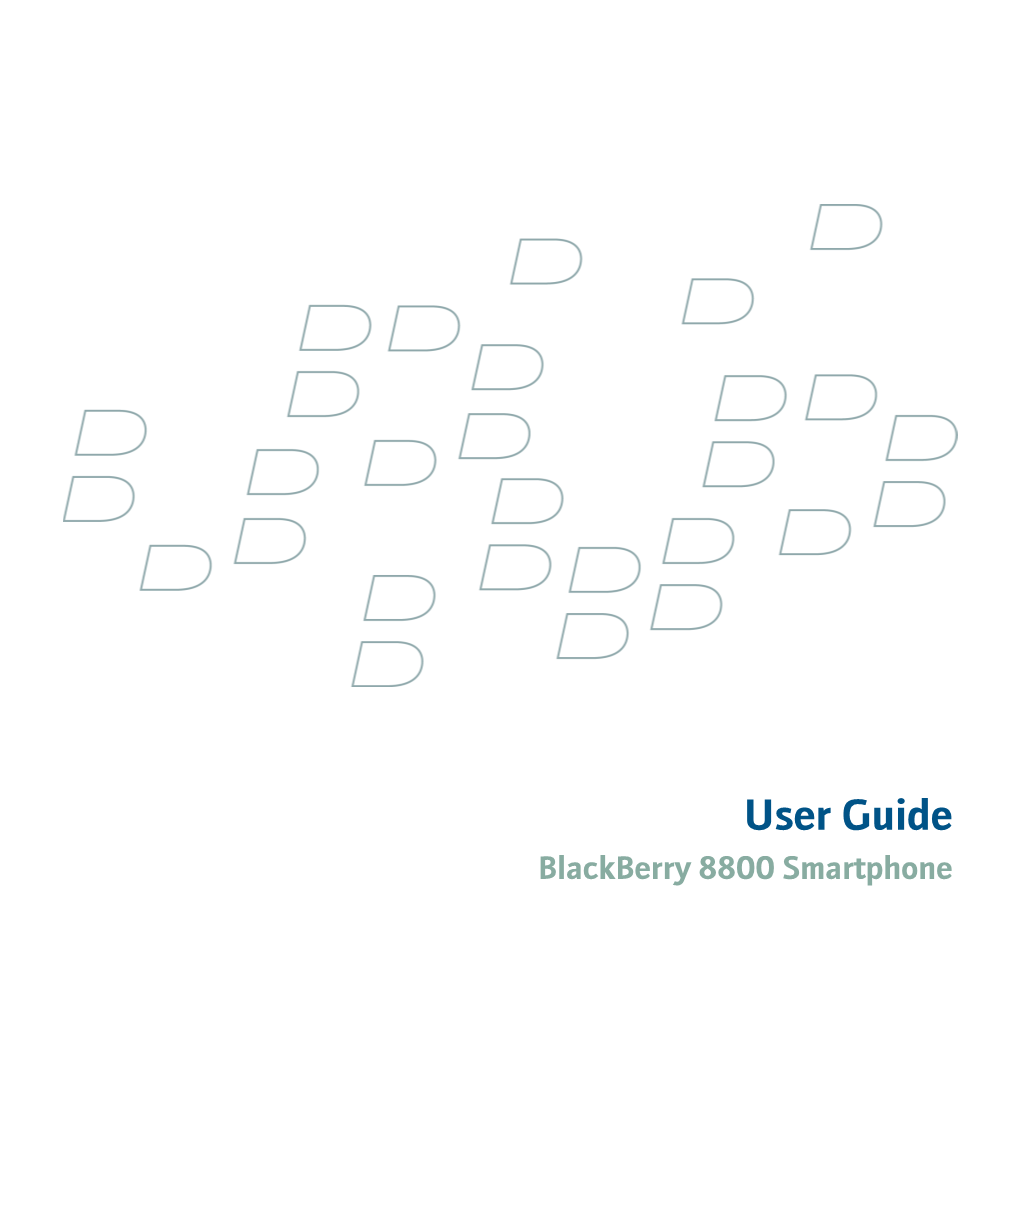 User Guide Blackberry 8800 Smartphone SWD-280419-0222085634-001 Contents